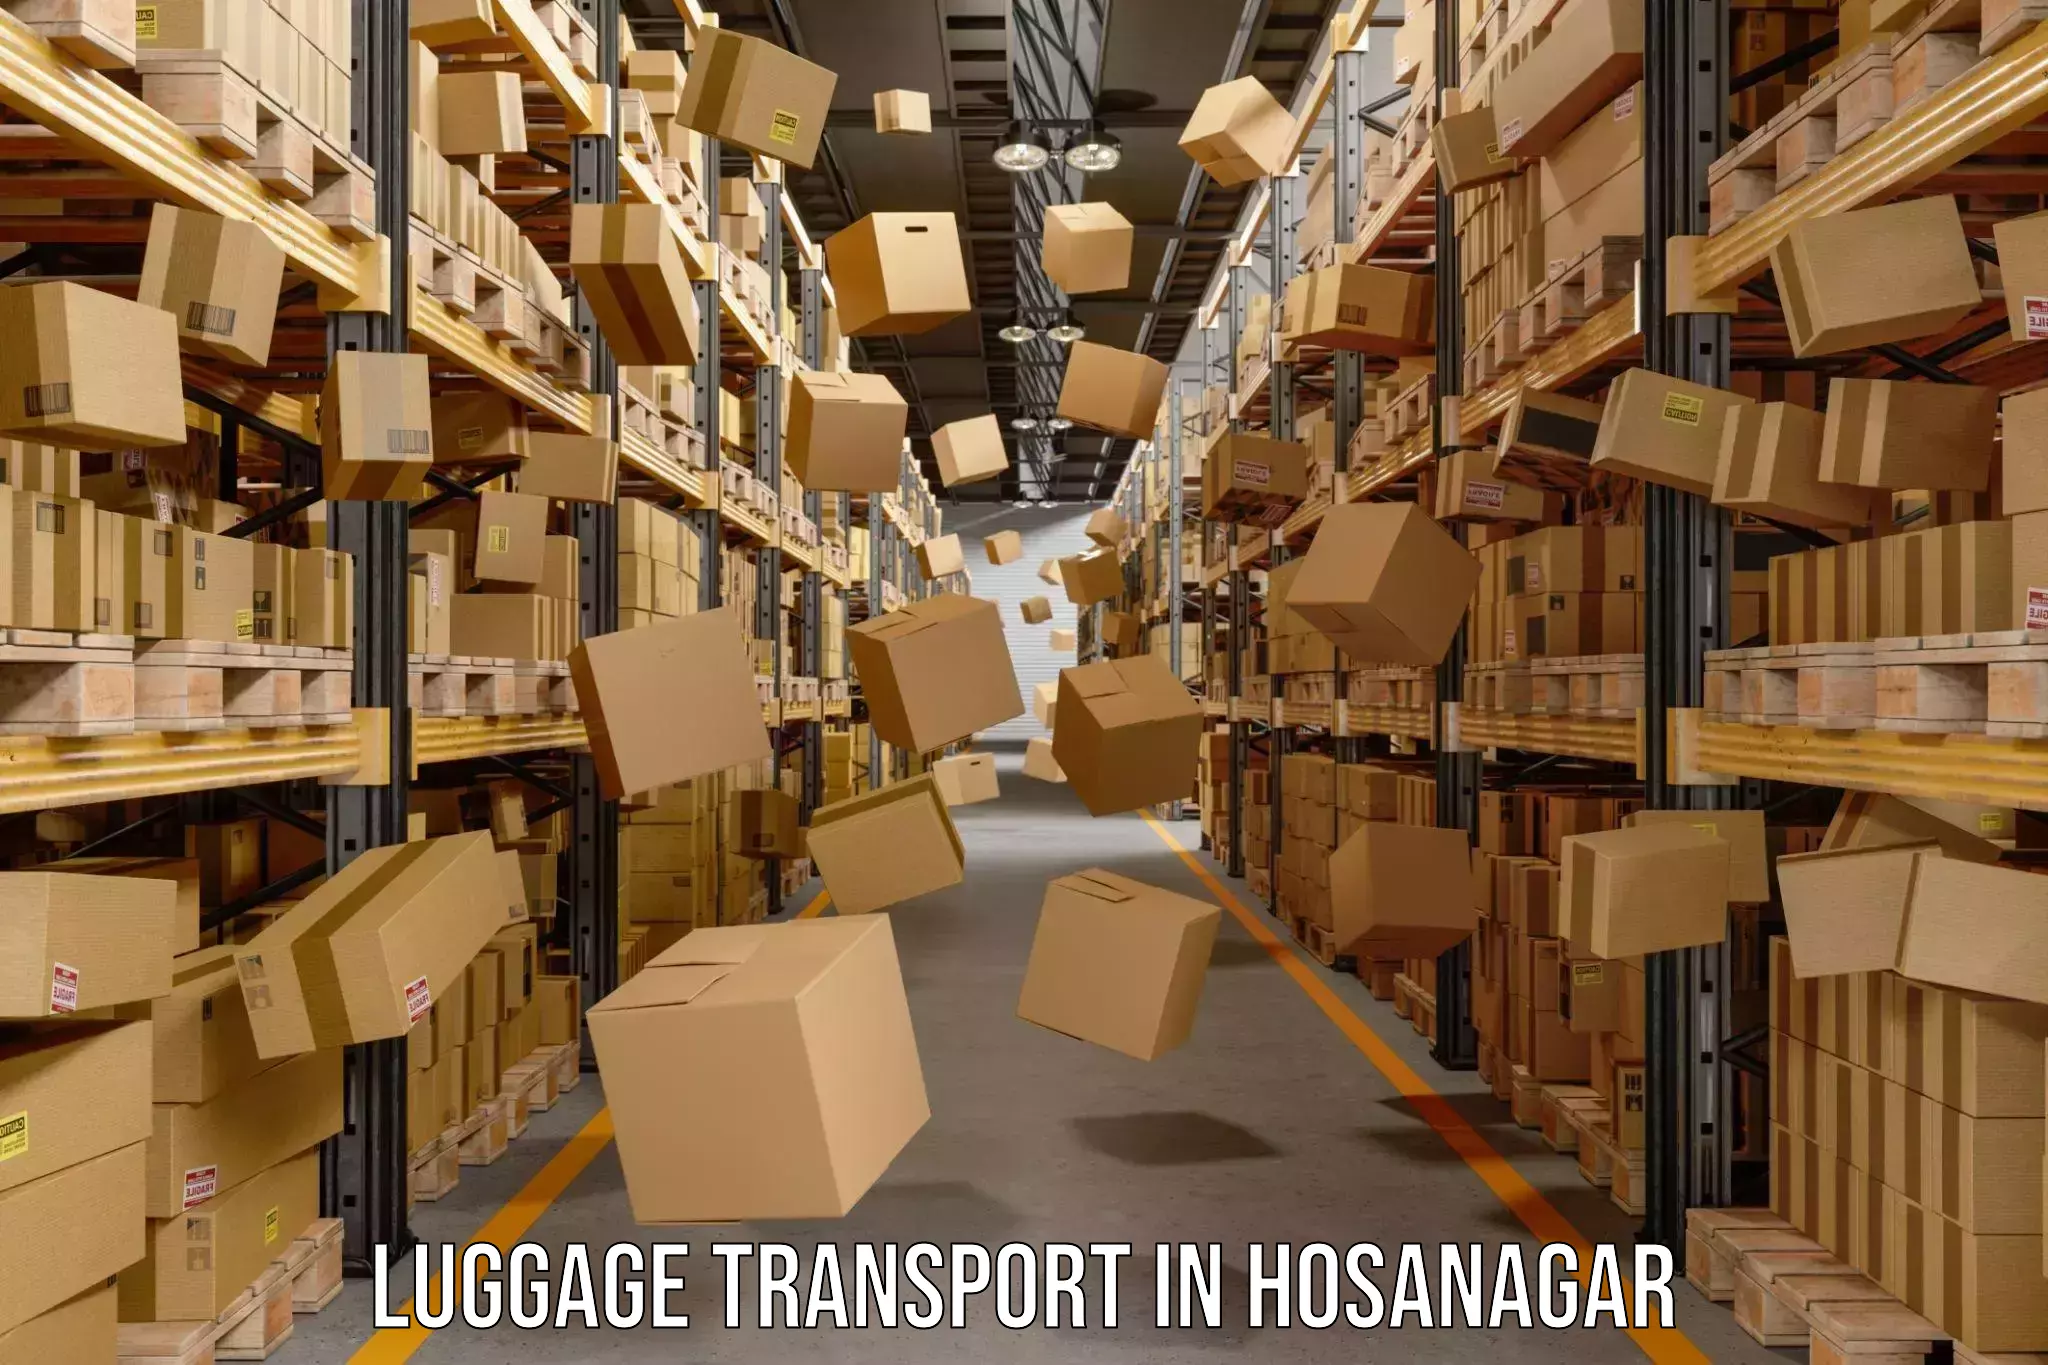 Baggage transport technology in Hosanagar